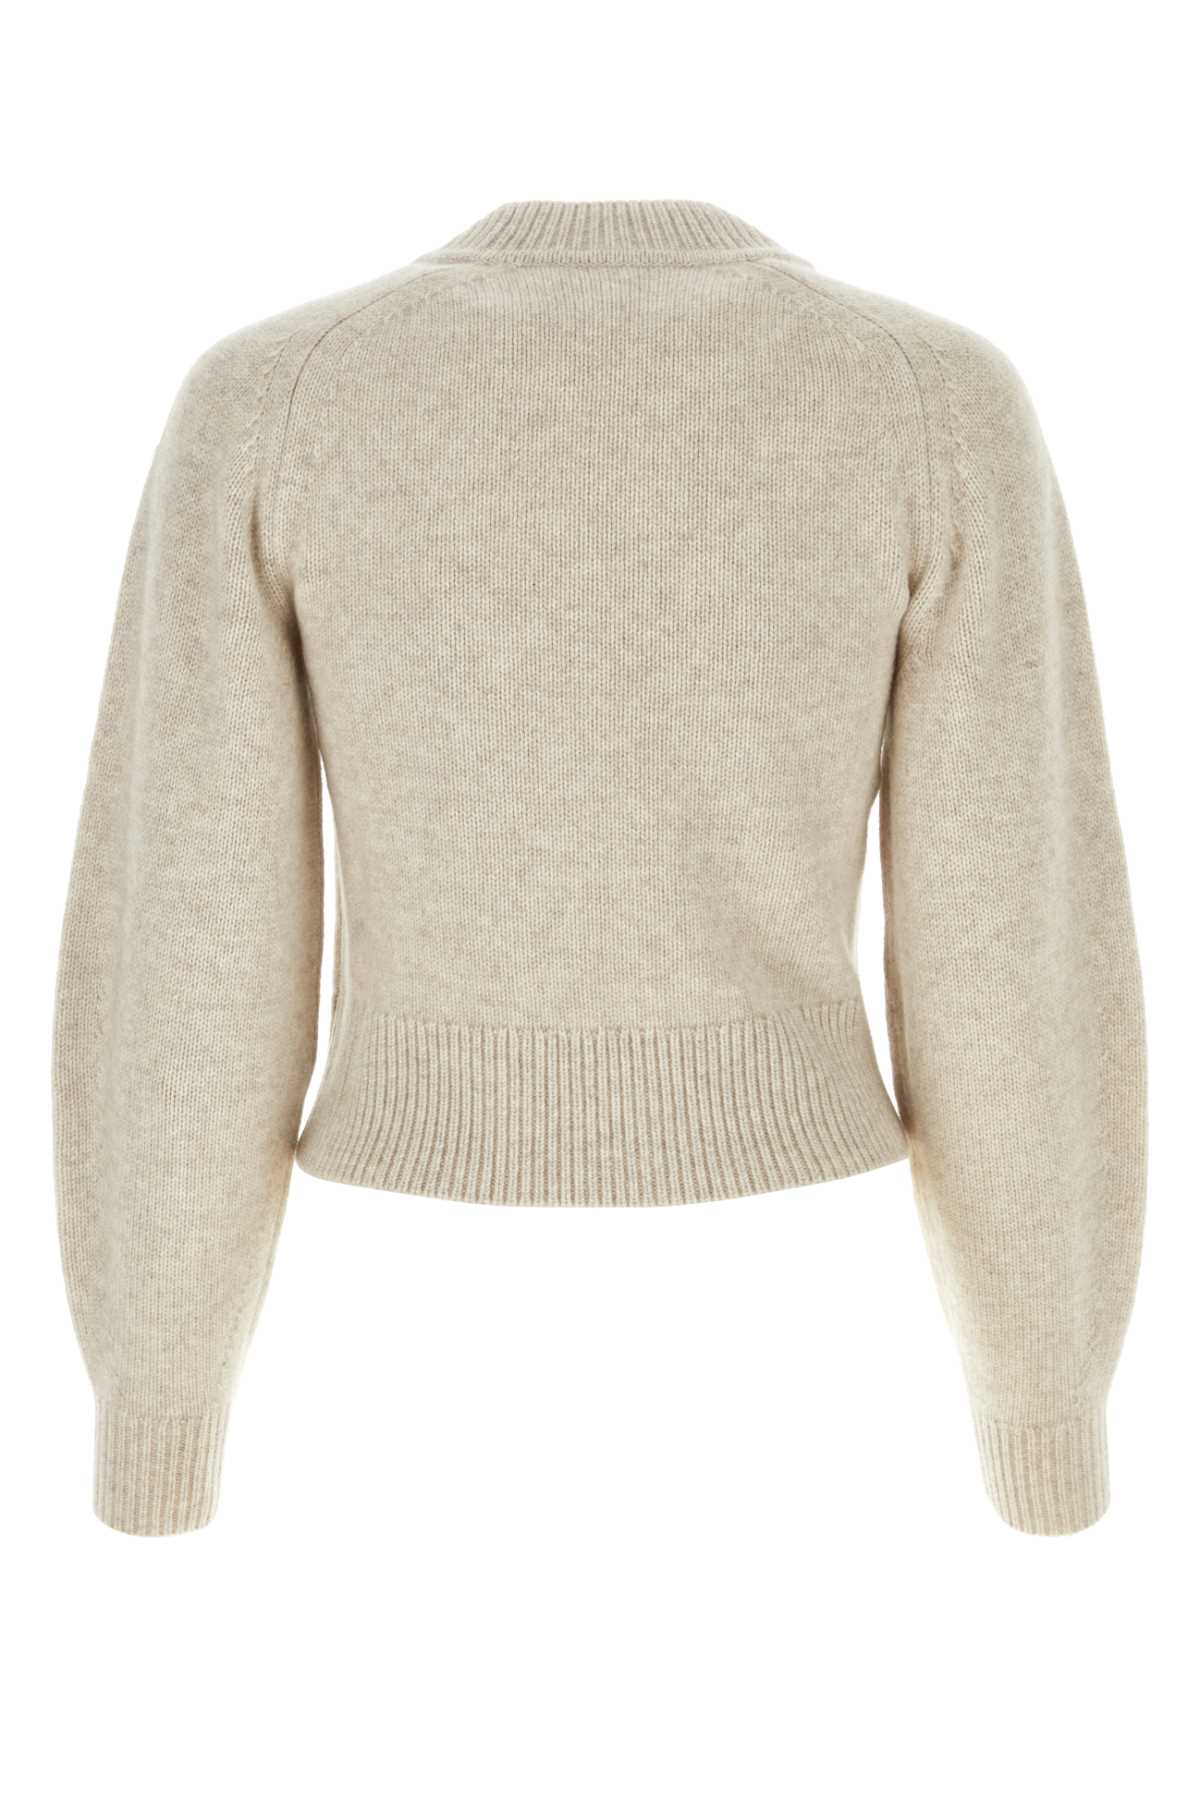 Isabel Marant Sand Cotton Blend Leandra Sweater